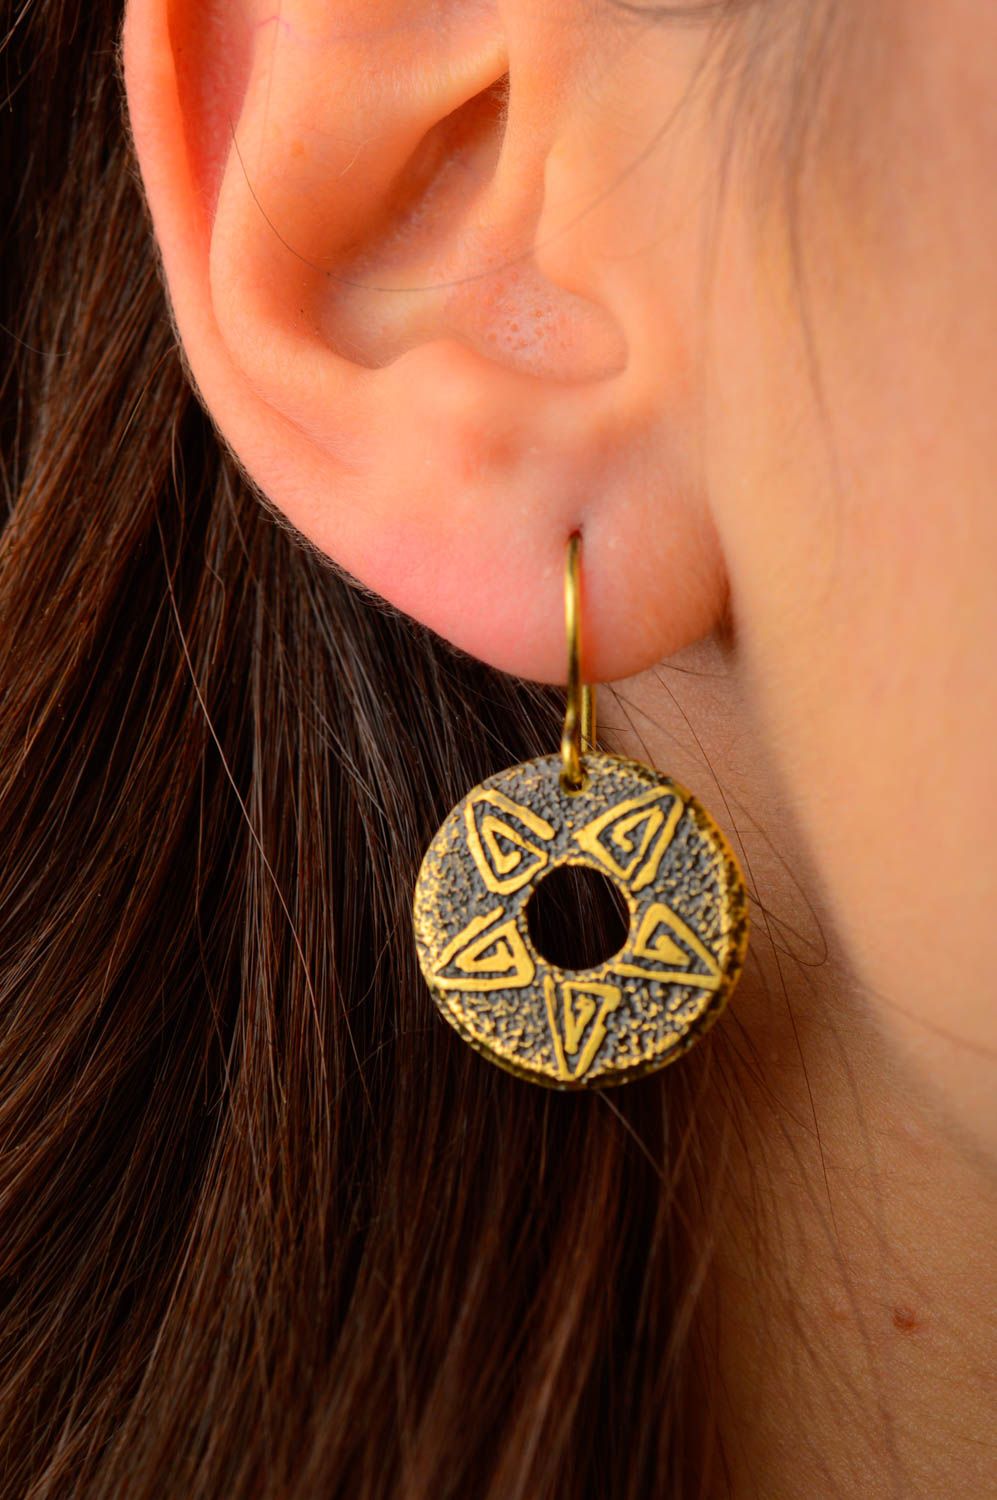 Handmade metal earrings unusual cute earrings fashion trends gifts for her photo 2